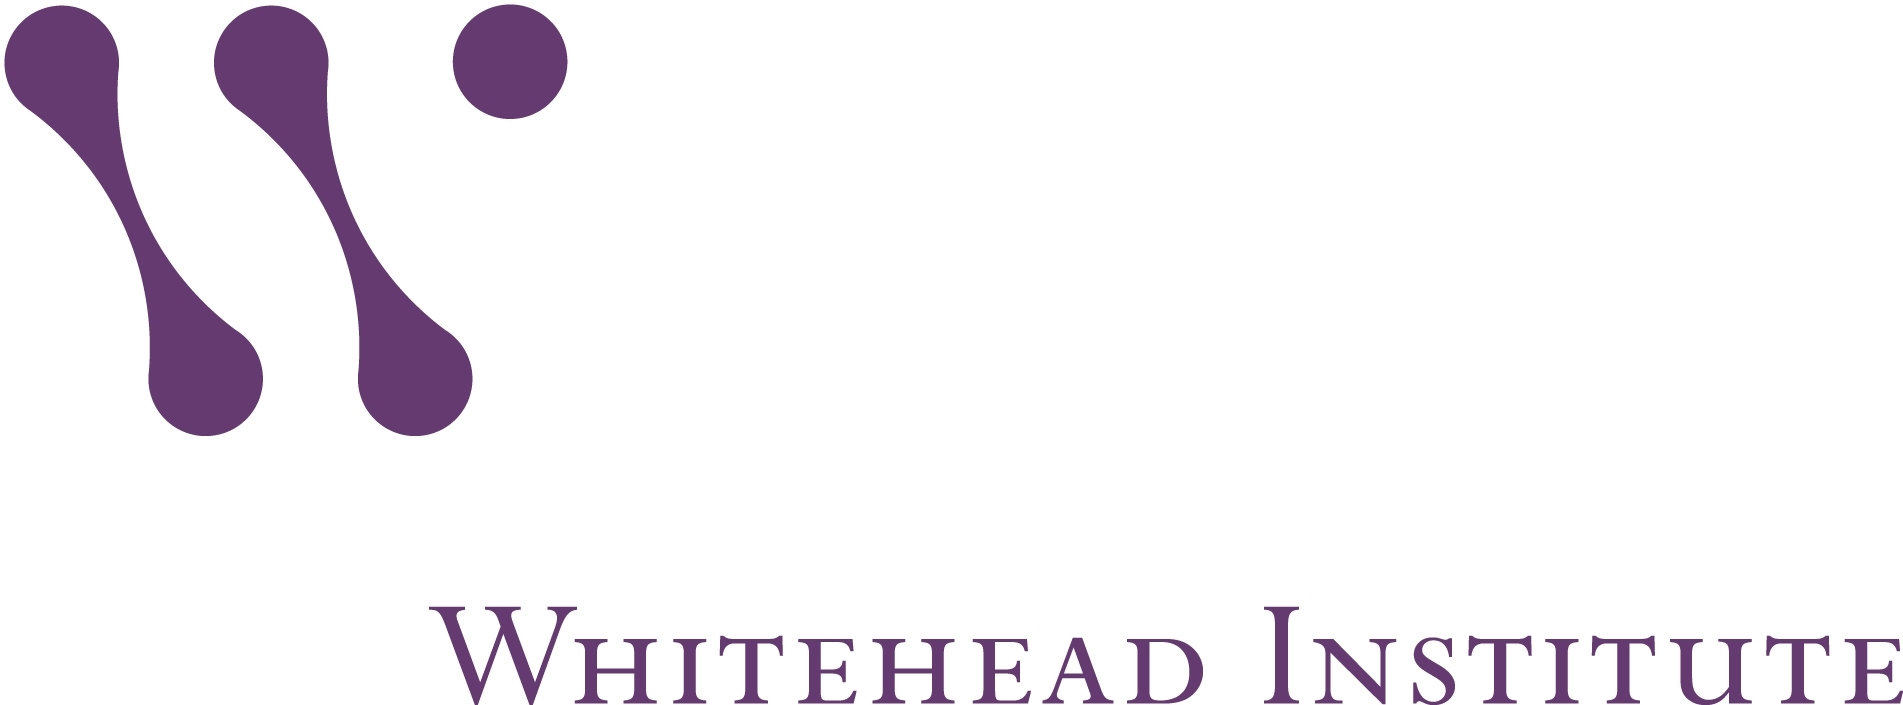 whitehead logo.JPG